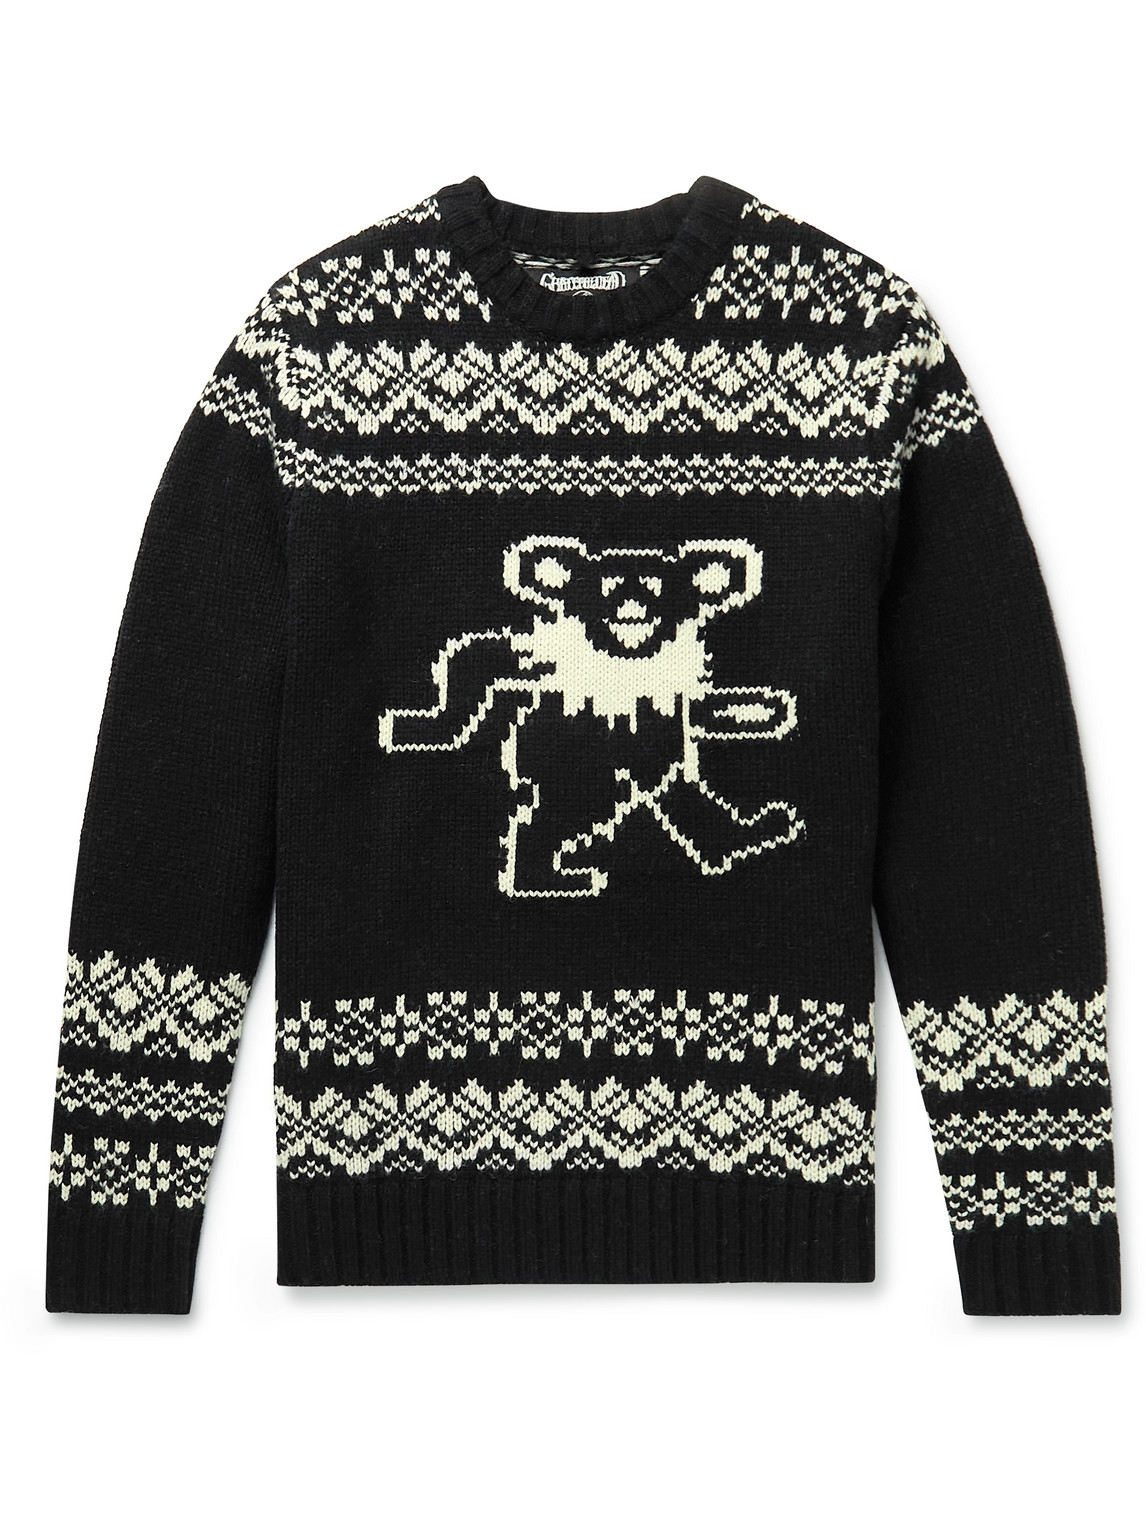 Schott Nyc X Grateful Dead Dancing Bear Sweater In Black